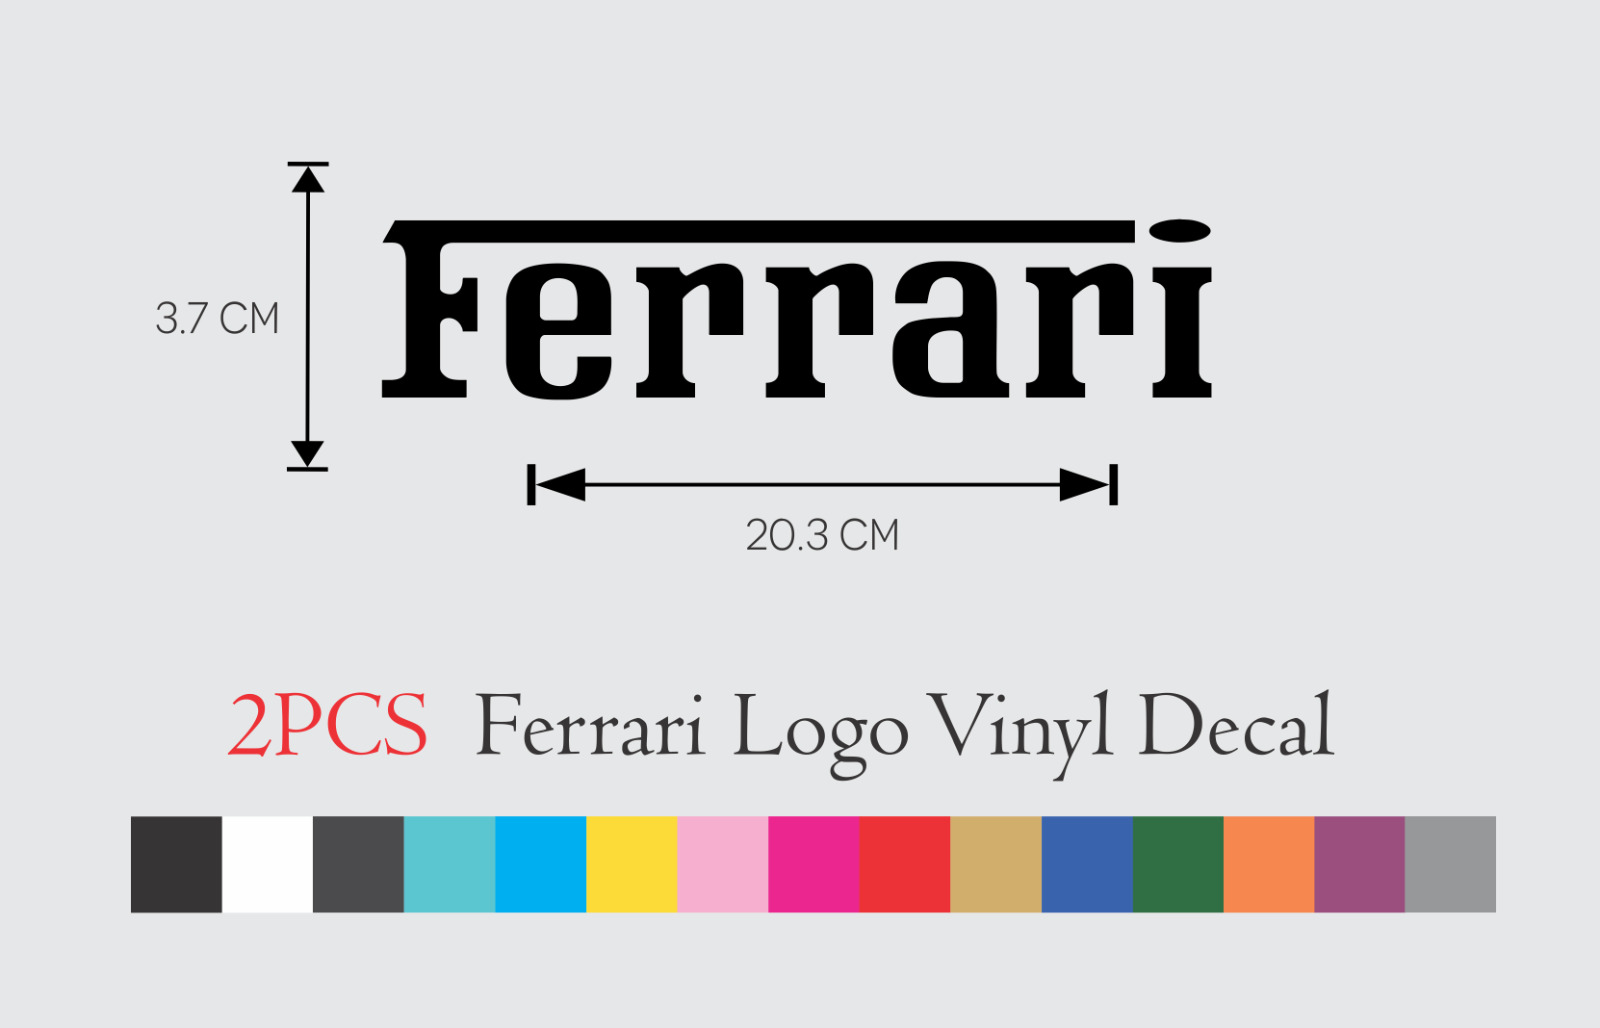 2 PCS Ferrari Logo Vinyl Decal Sticker 8 Inch OR 11 Inch SET